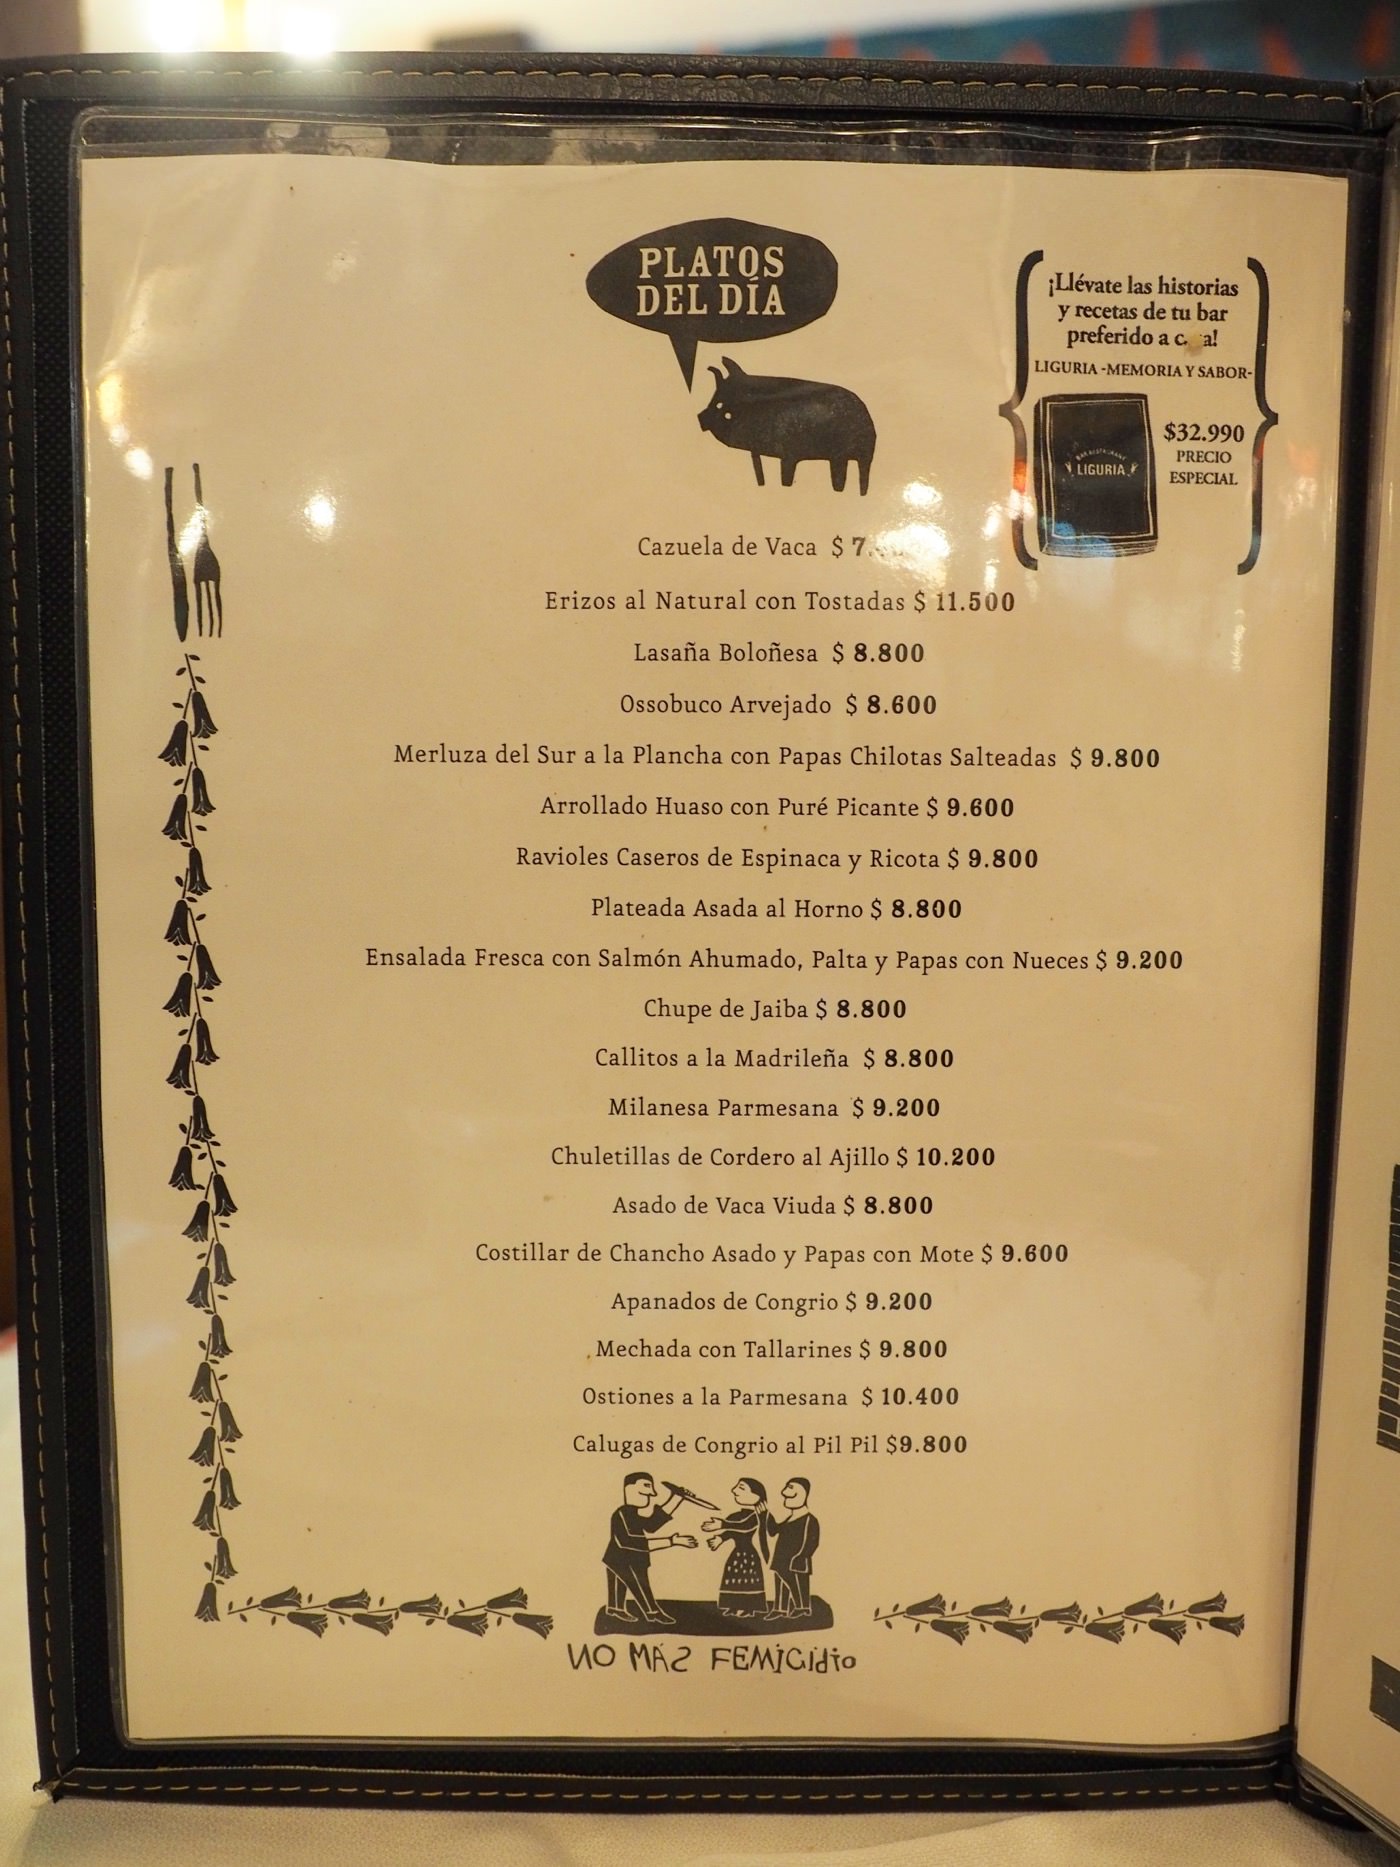 聖地牙哥美食 Manuel Montt 站附近餐館三家：Liguria Bar & Restaurant｜Schopdog｜漢堡店 Domino - 一口冒險 Bitesized Adventure